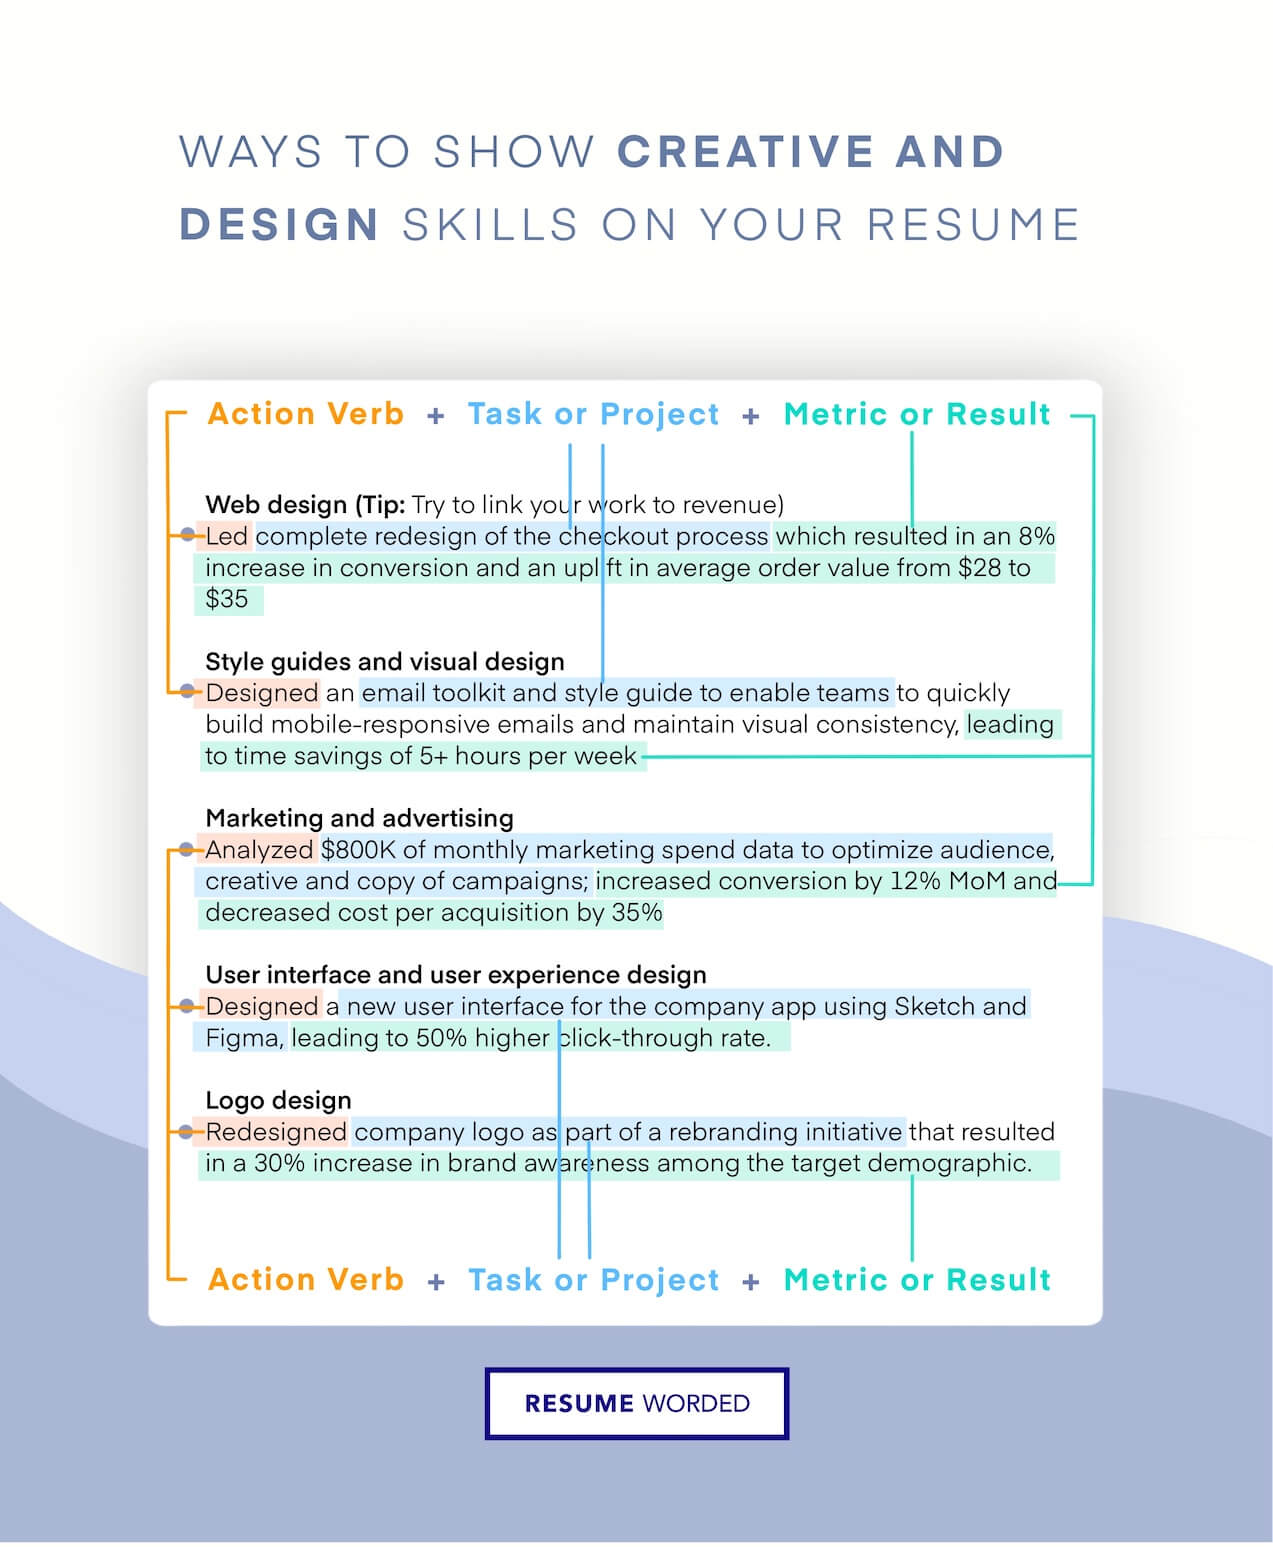 Gain certification in design and design tools. - Junior Art Director Resume